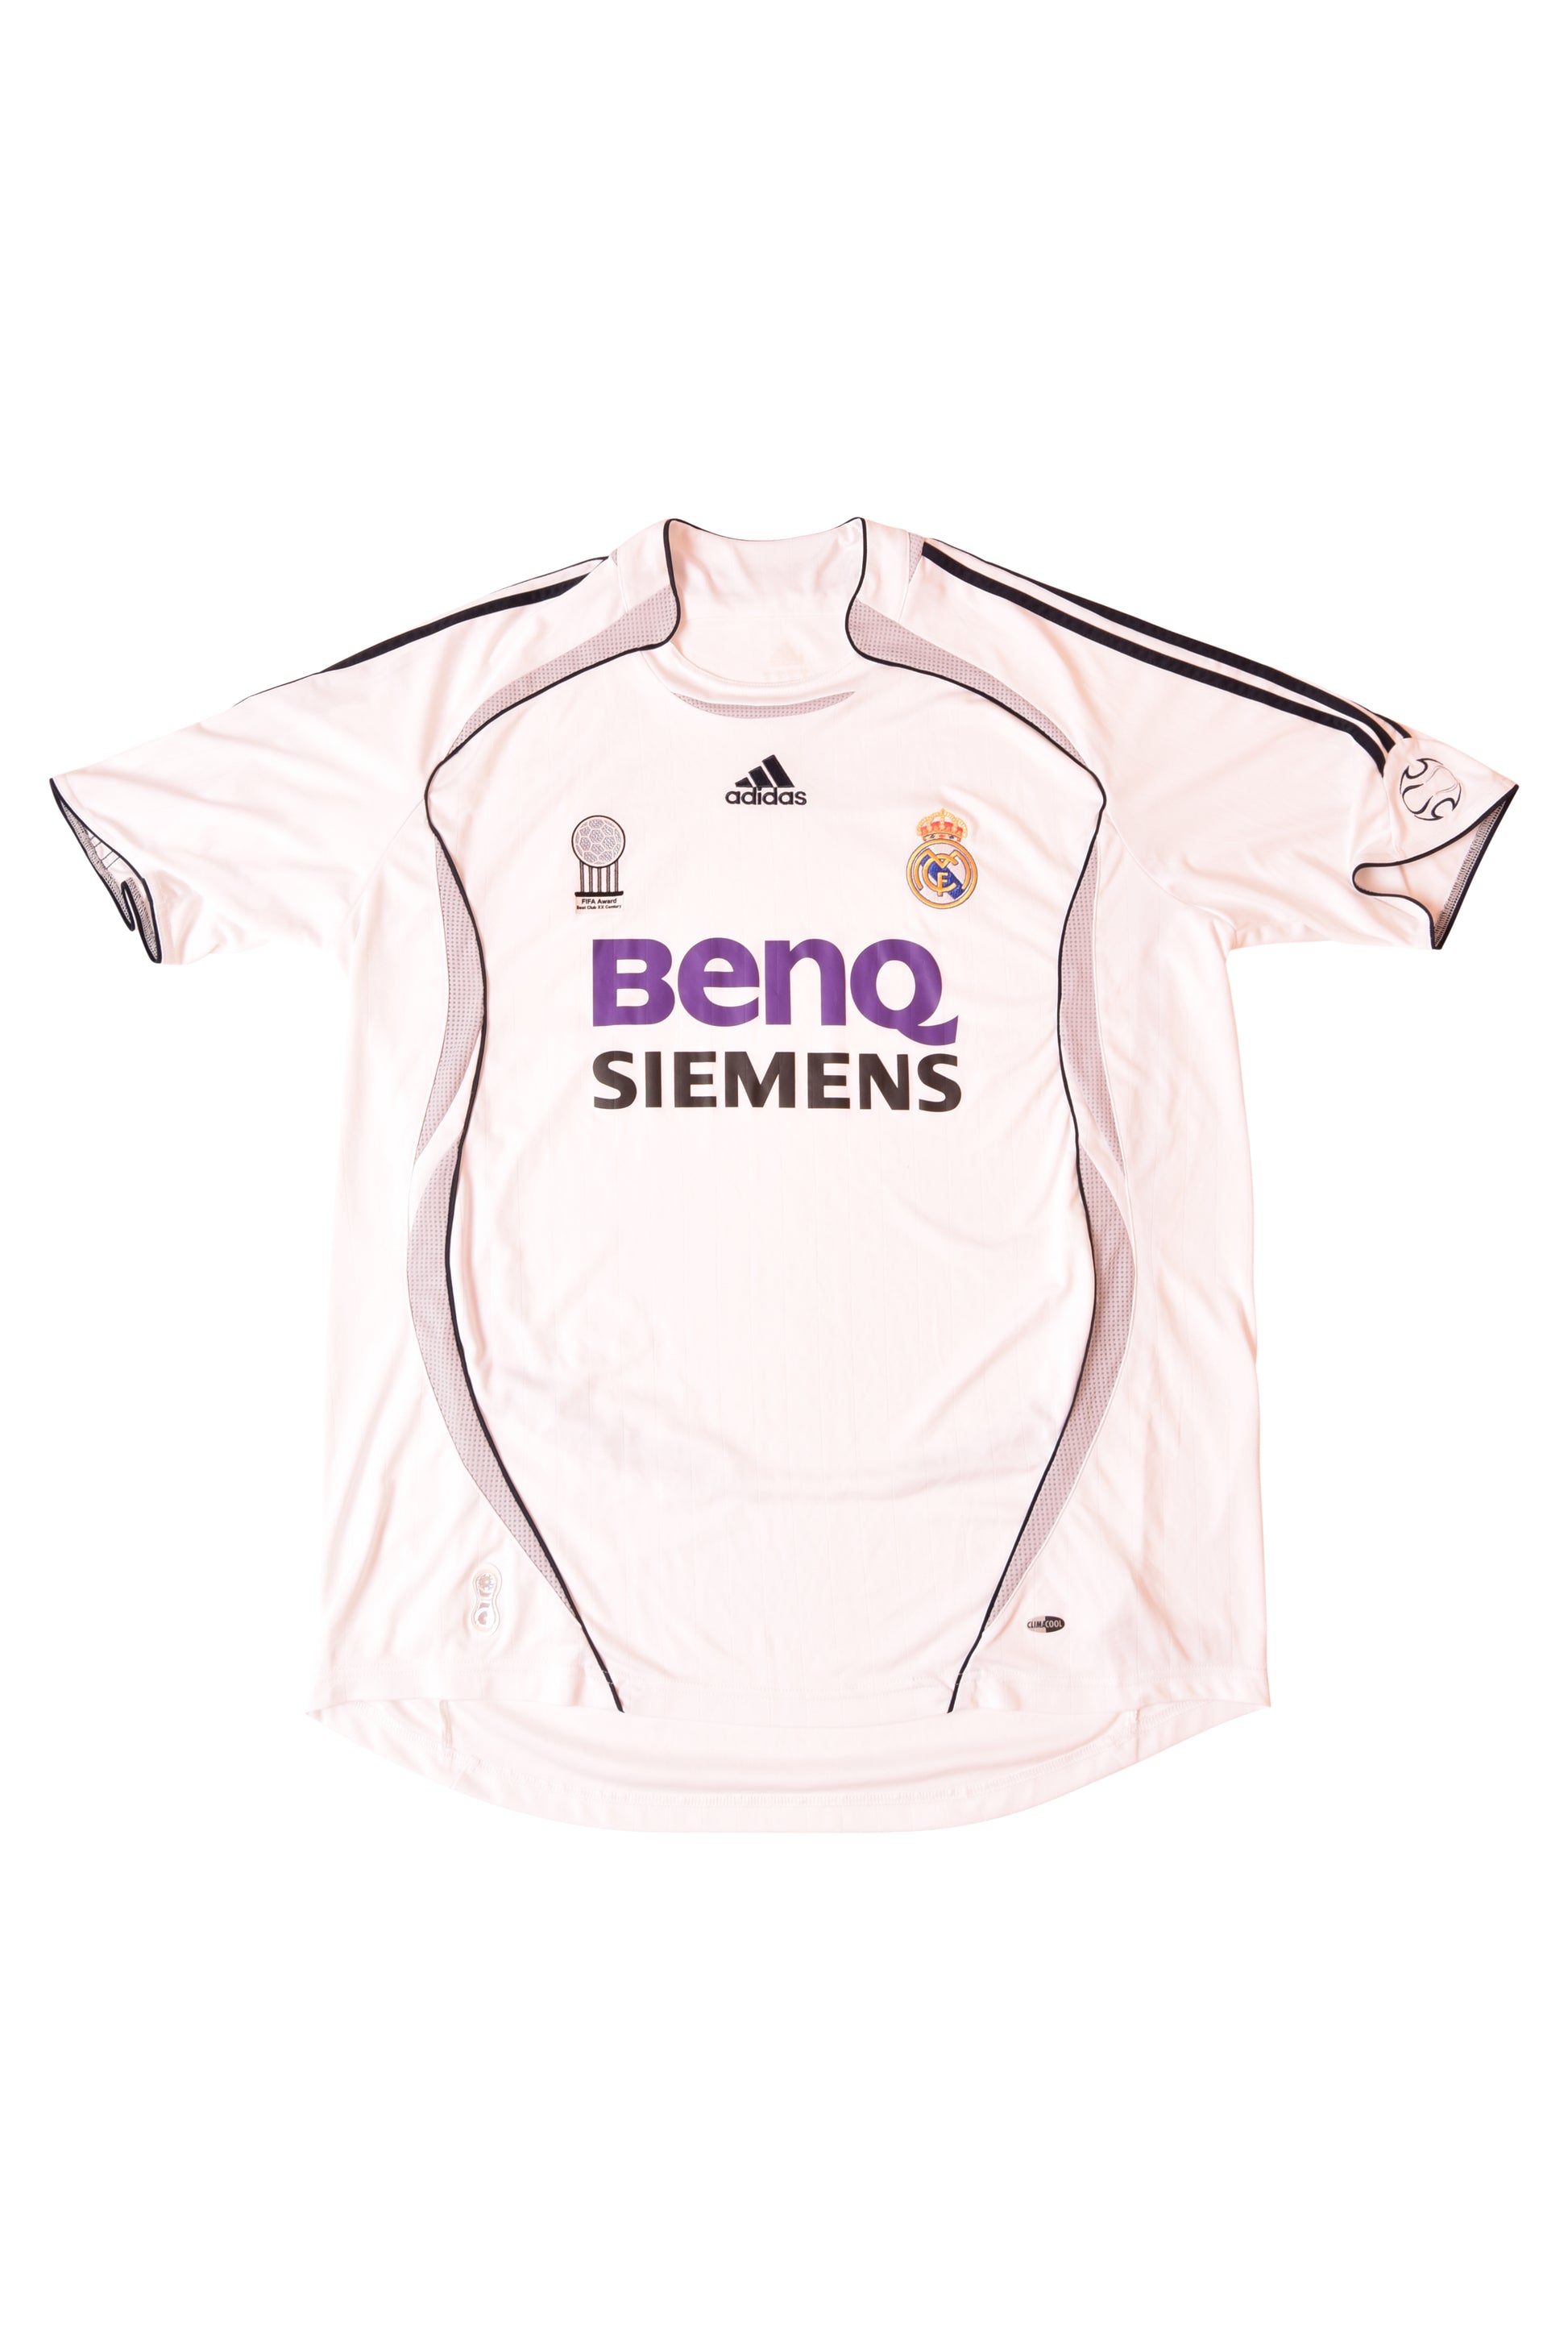 Real Madrid 2006 - 2007 Home Football Shirt Size XL BENQ Siemens White 